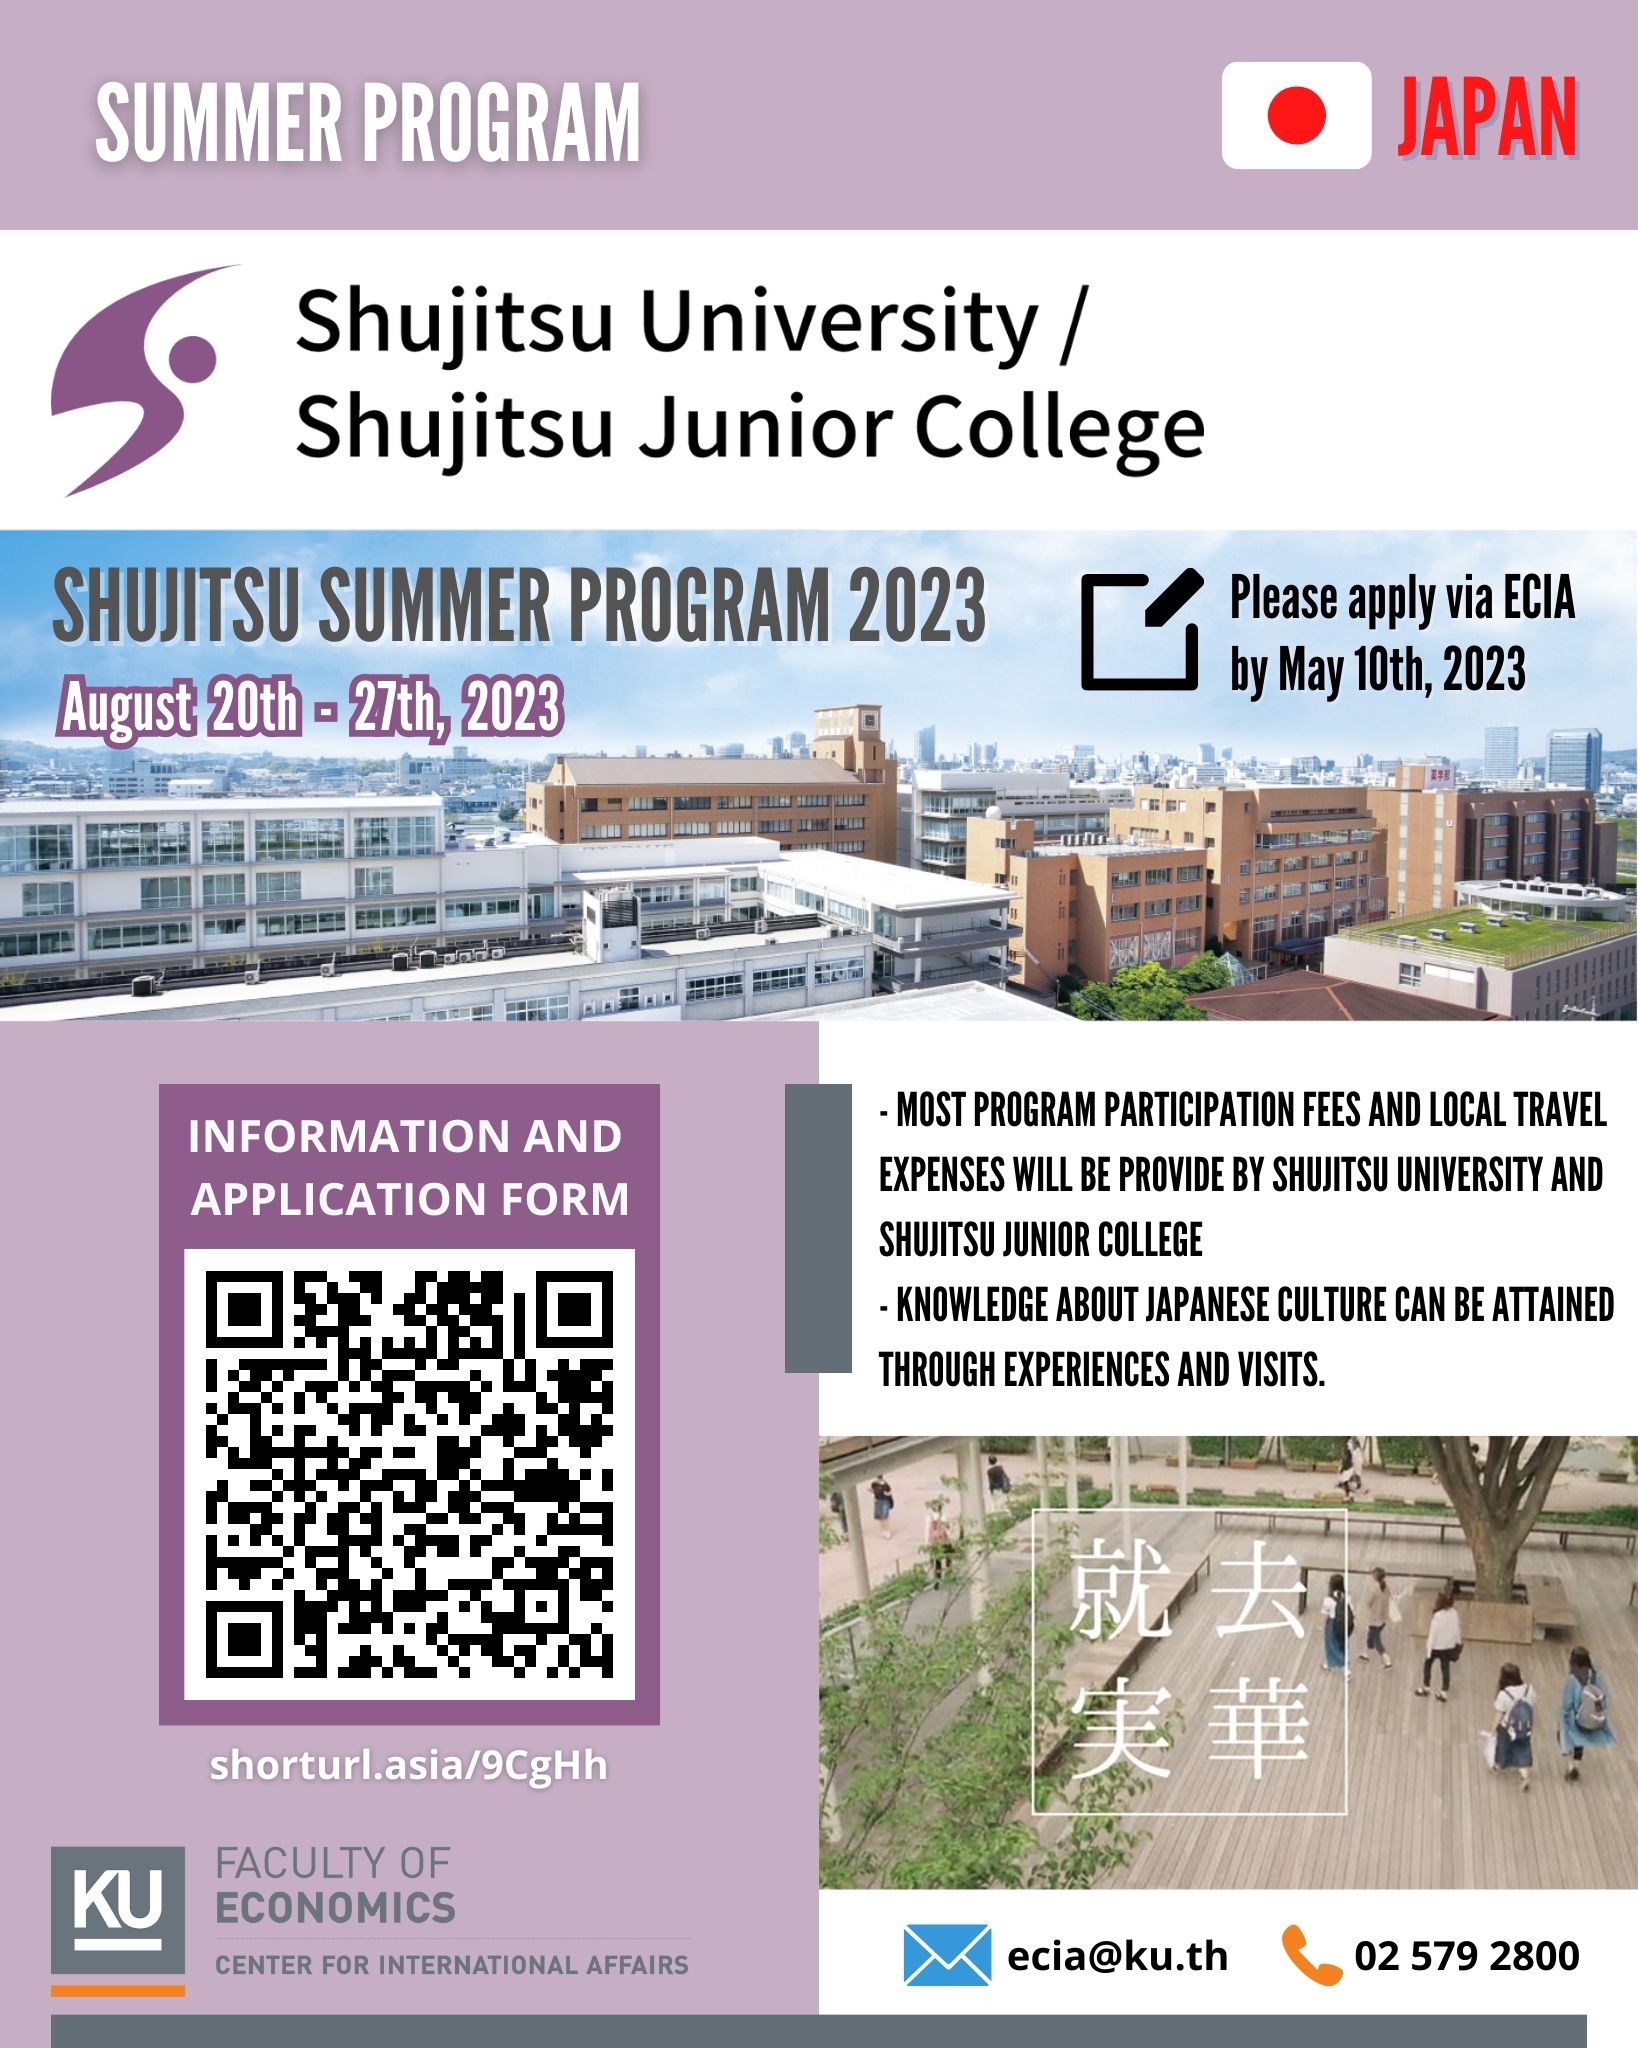 SHUJITSU Summer Program in JAPAN 20-27 AUG, 2023